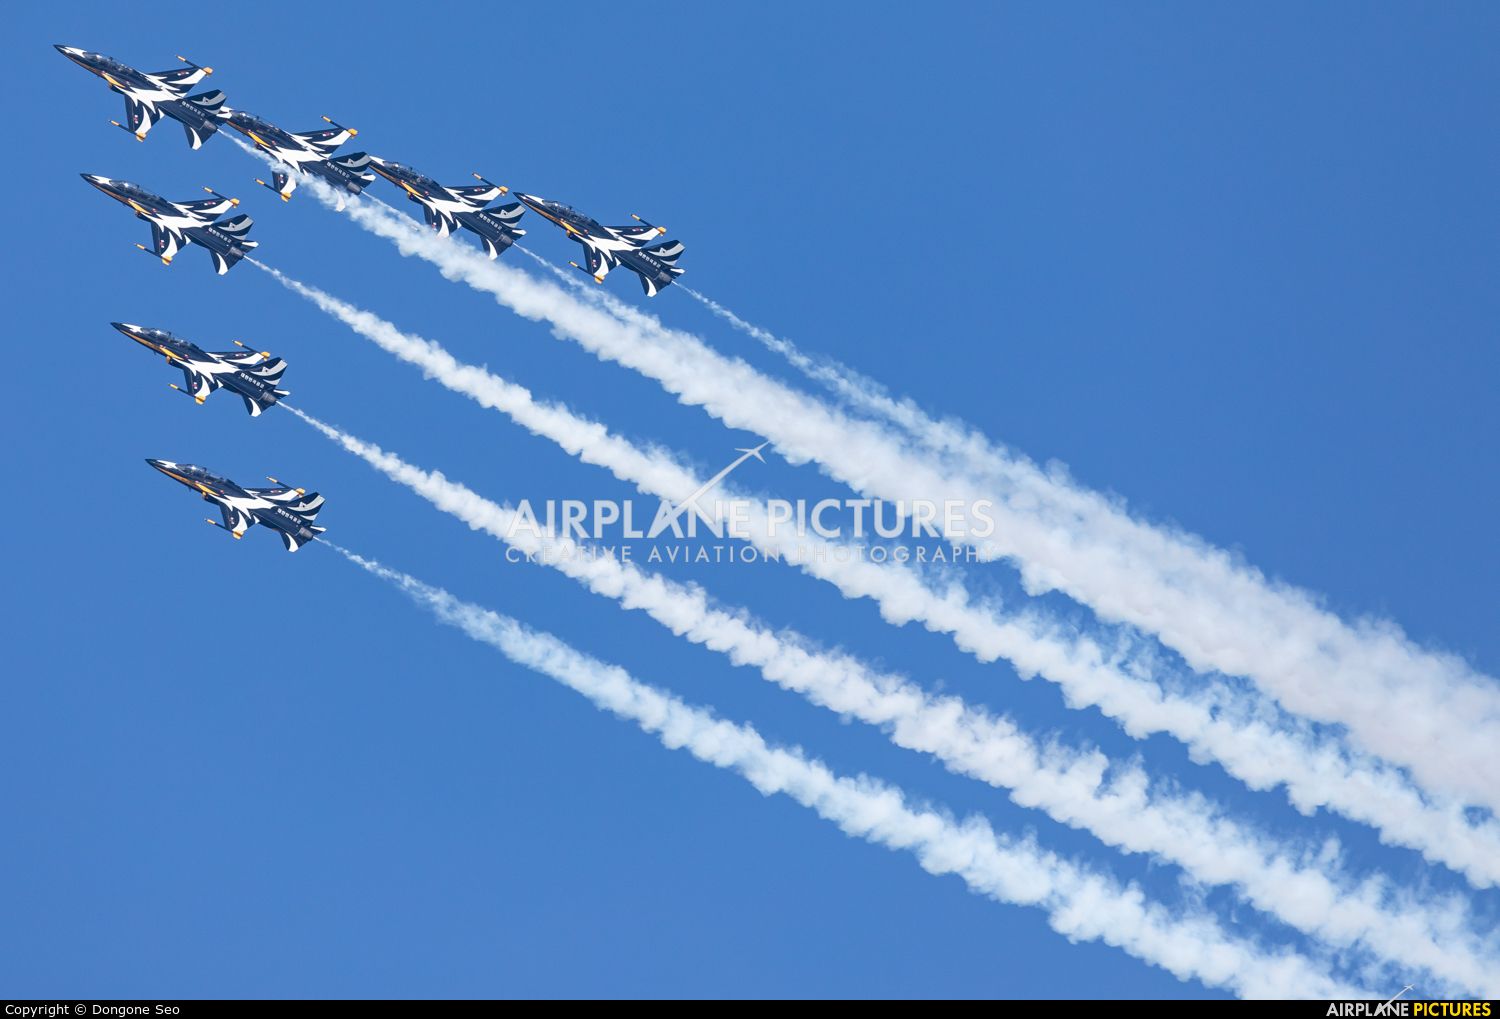 Korea (South) - Air Force: Black Eagles 10-0058 aircraft at Seongnam AB